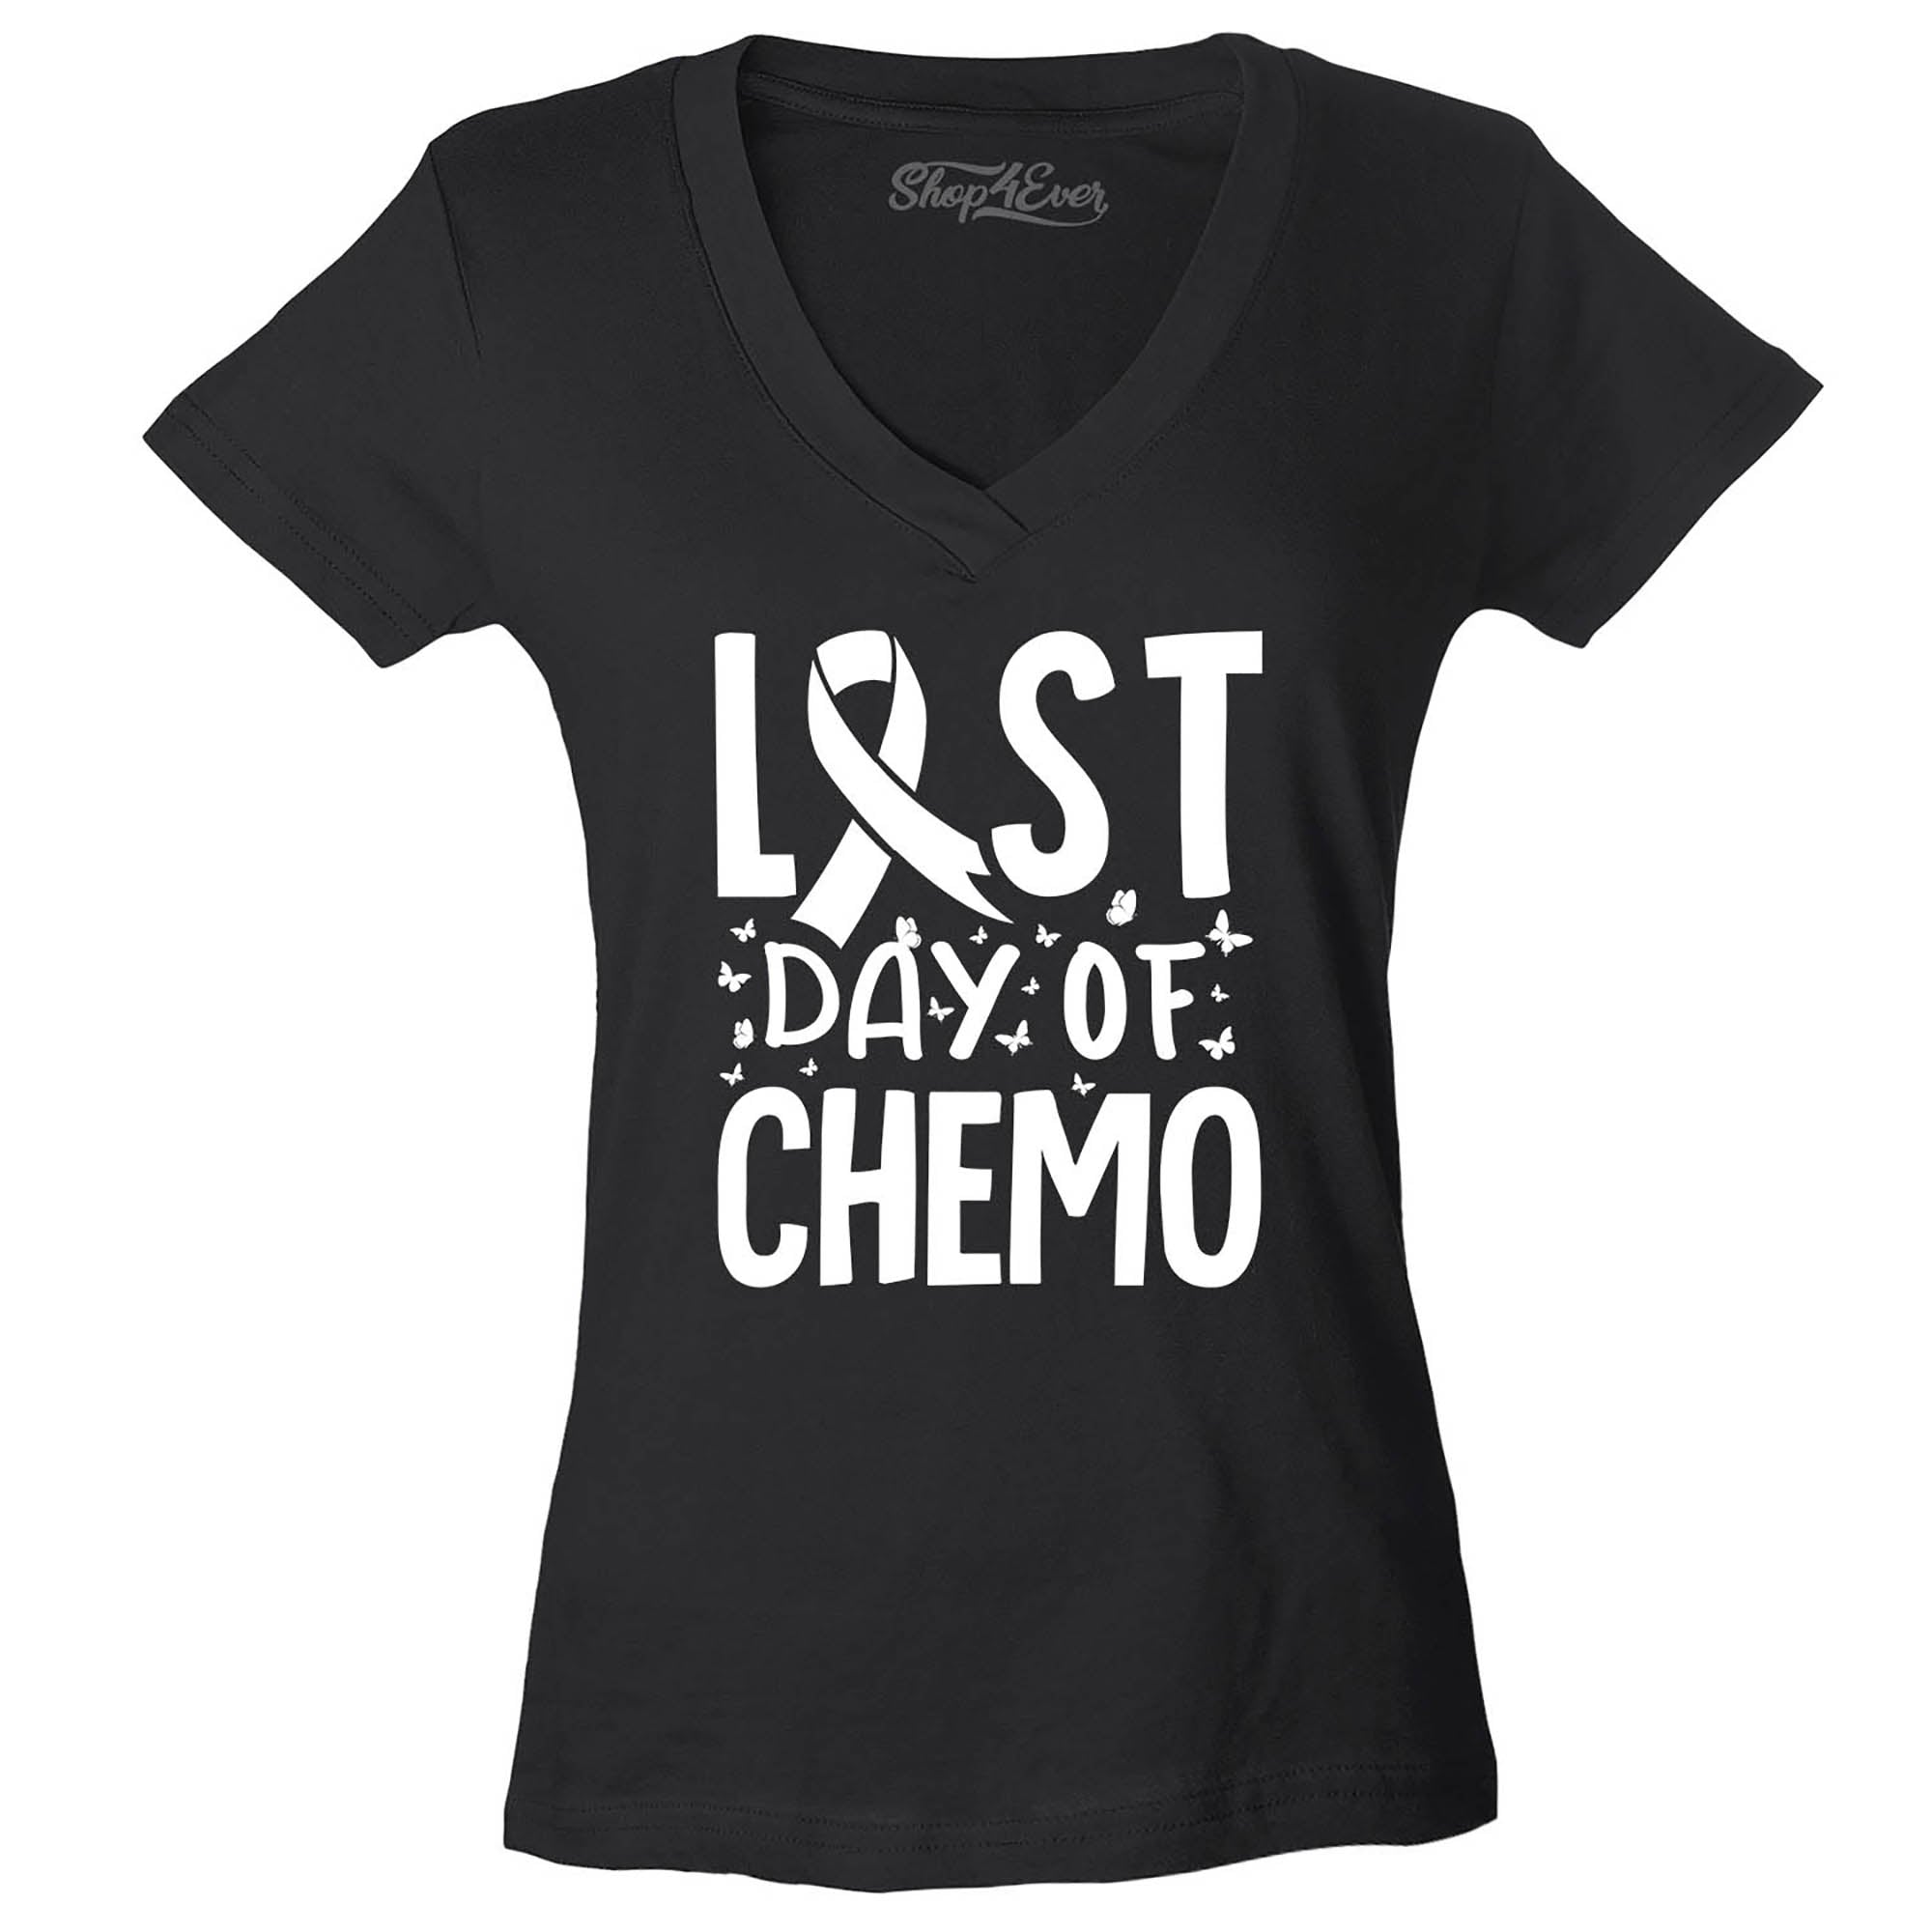 Last Day of Chemo Celebrate Cancer Survivor Women's V-Neck T-Shirt Slim Fit